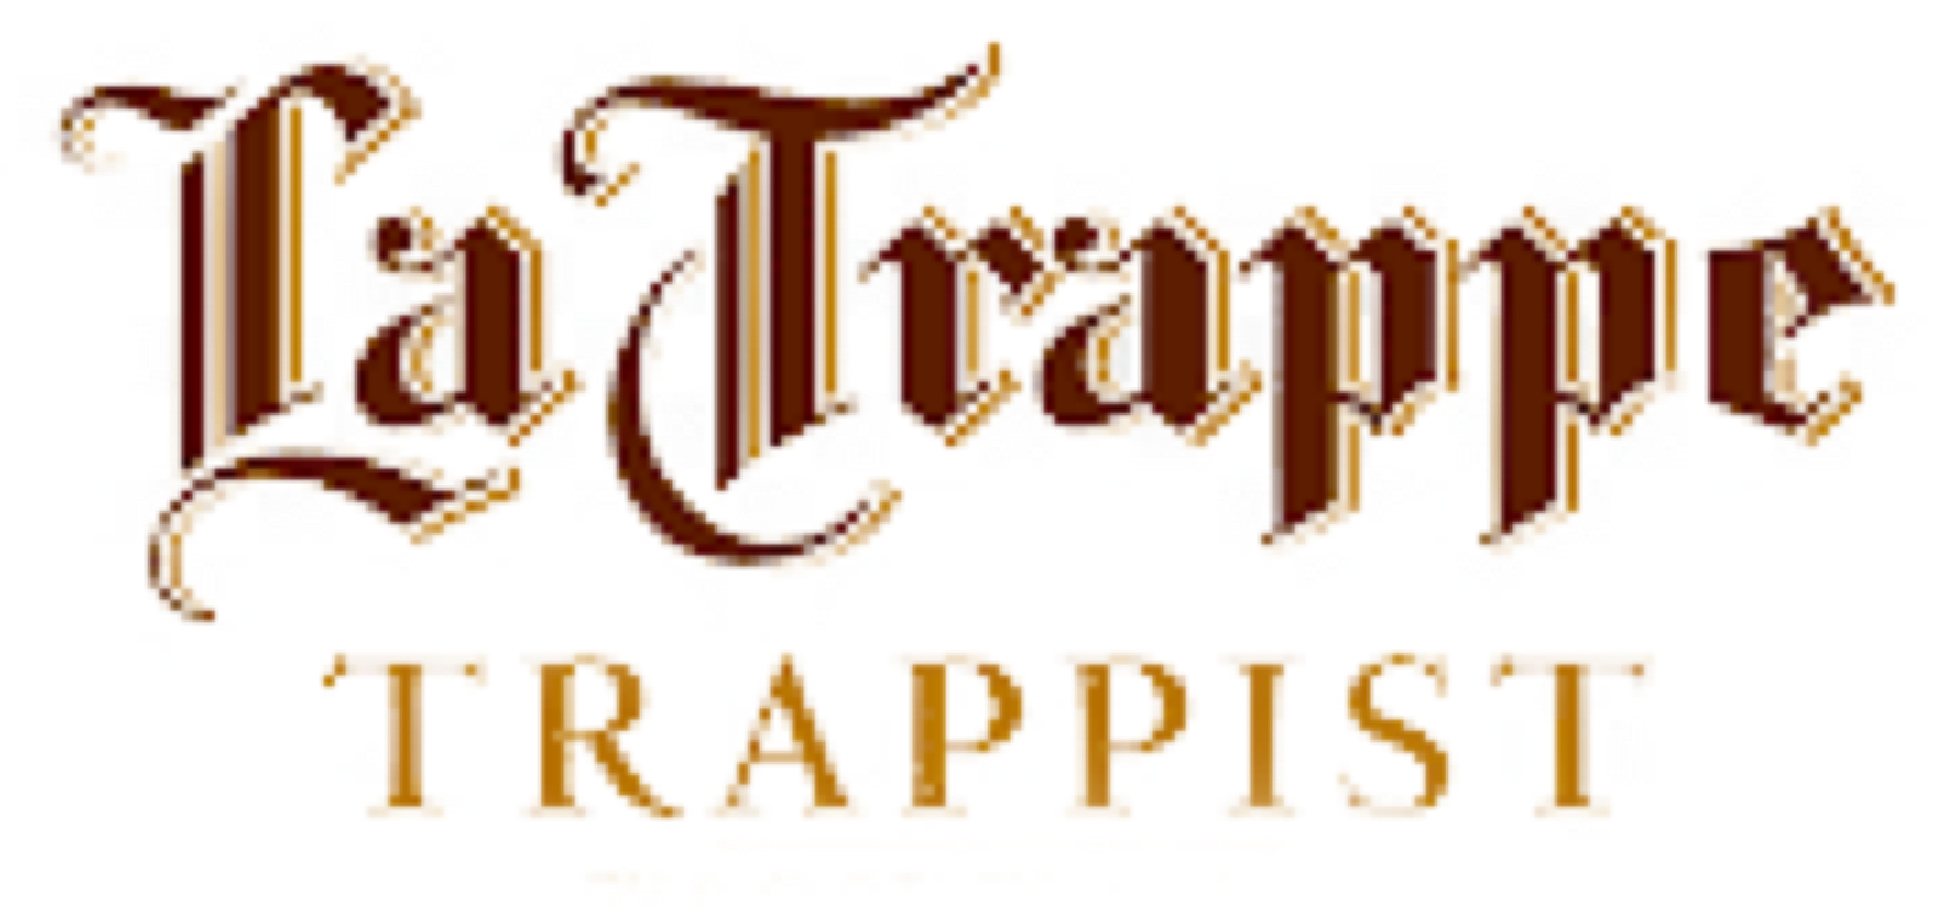 La Trappe Trappist - Brouwerij de Koningshoeven